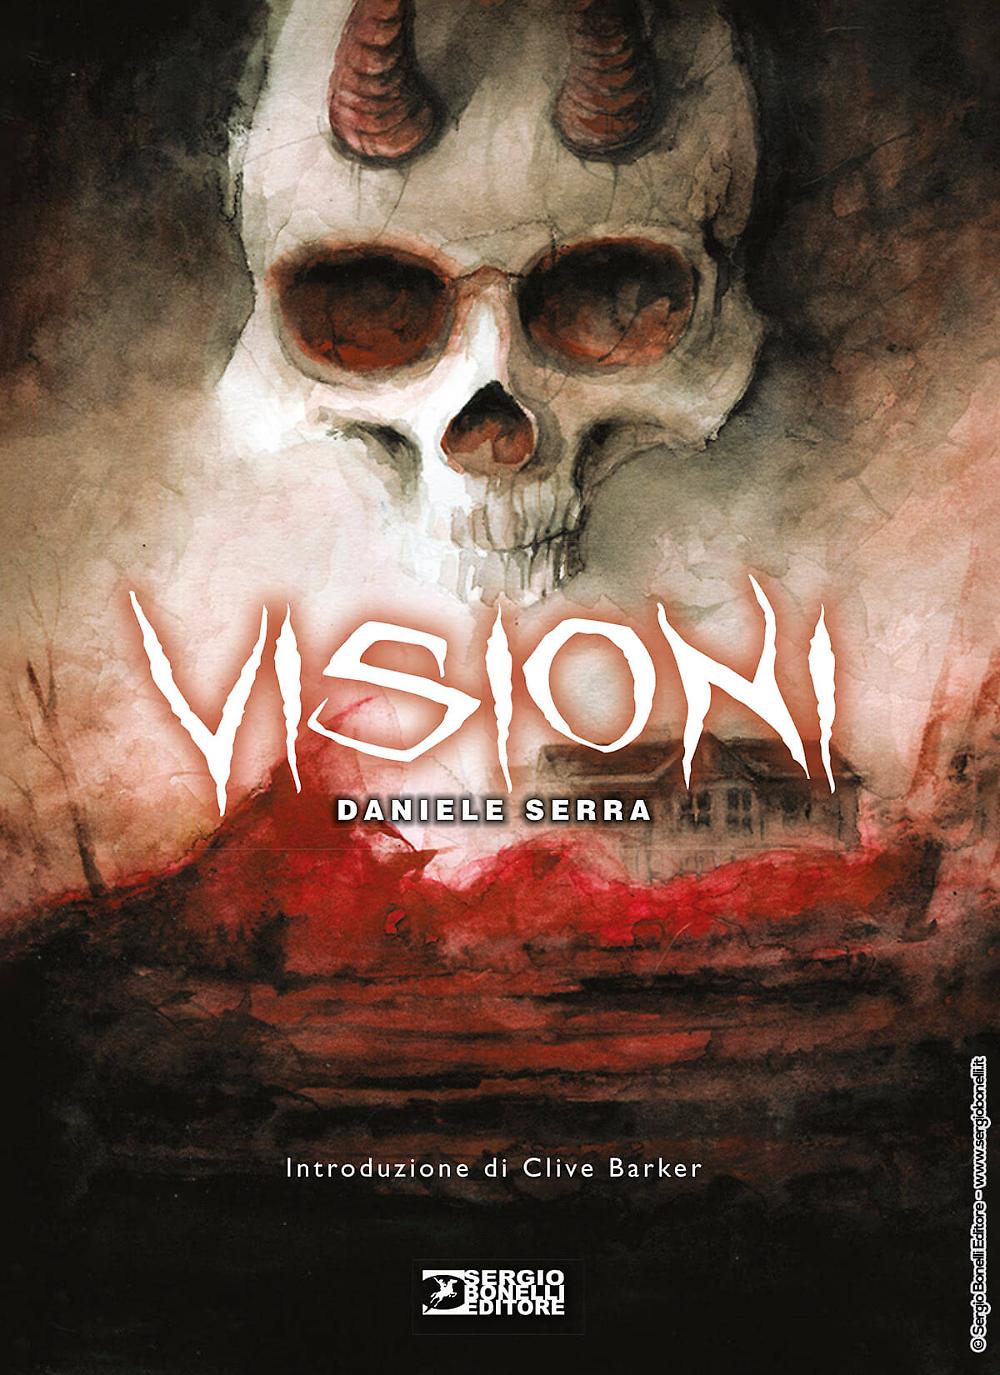 Sergio Bonelli Editore presenta Visioni di Daniele Serra